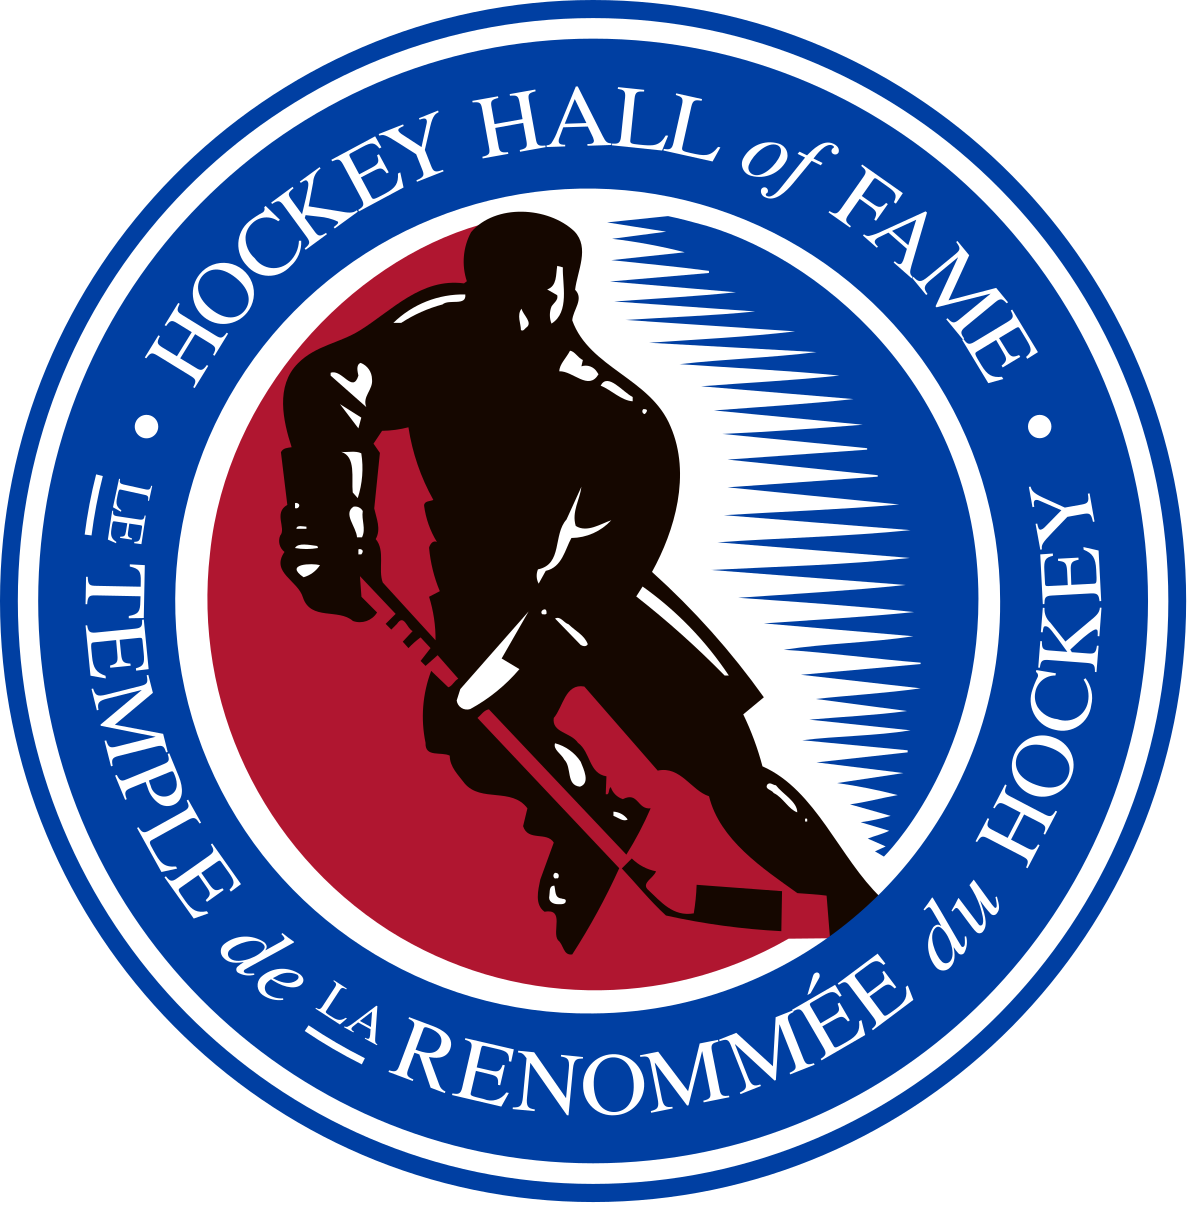 Hockey-hall-of-fame-logo